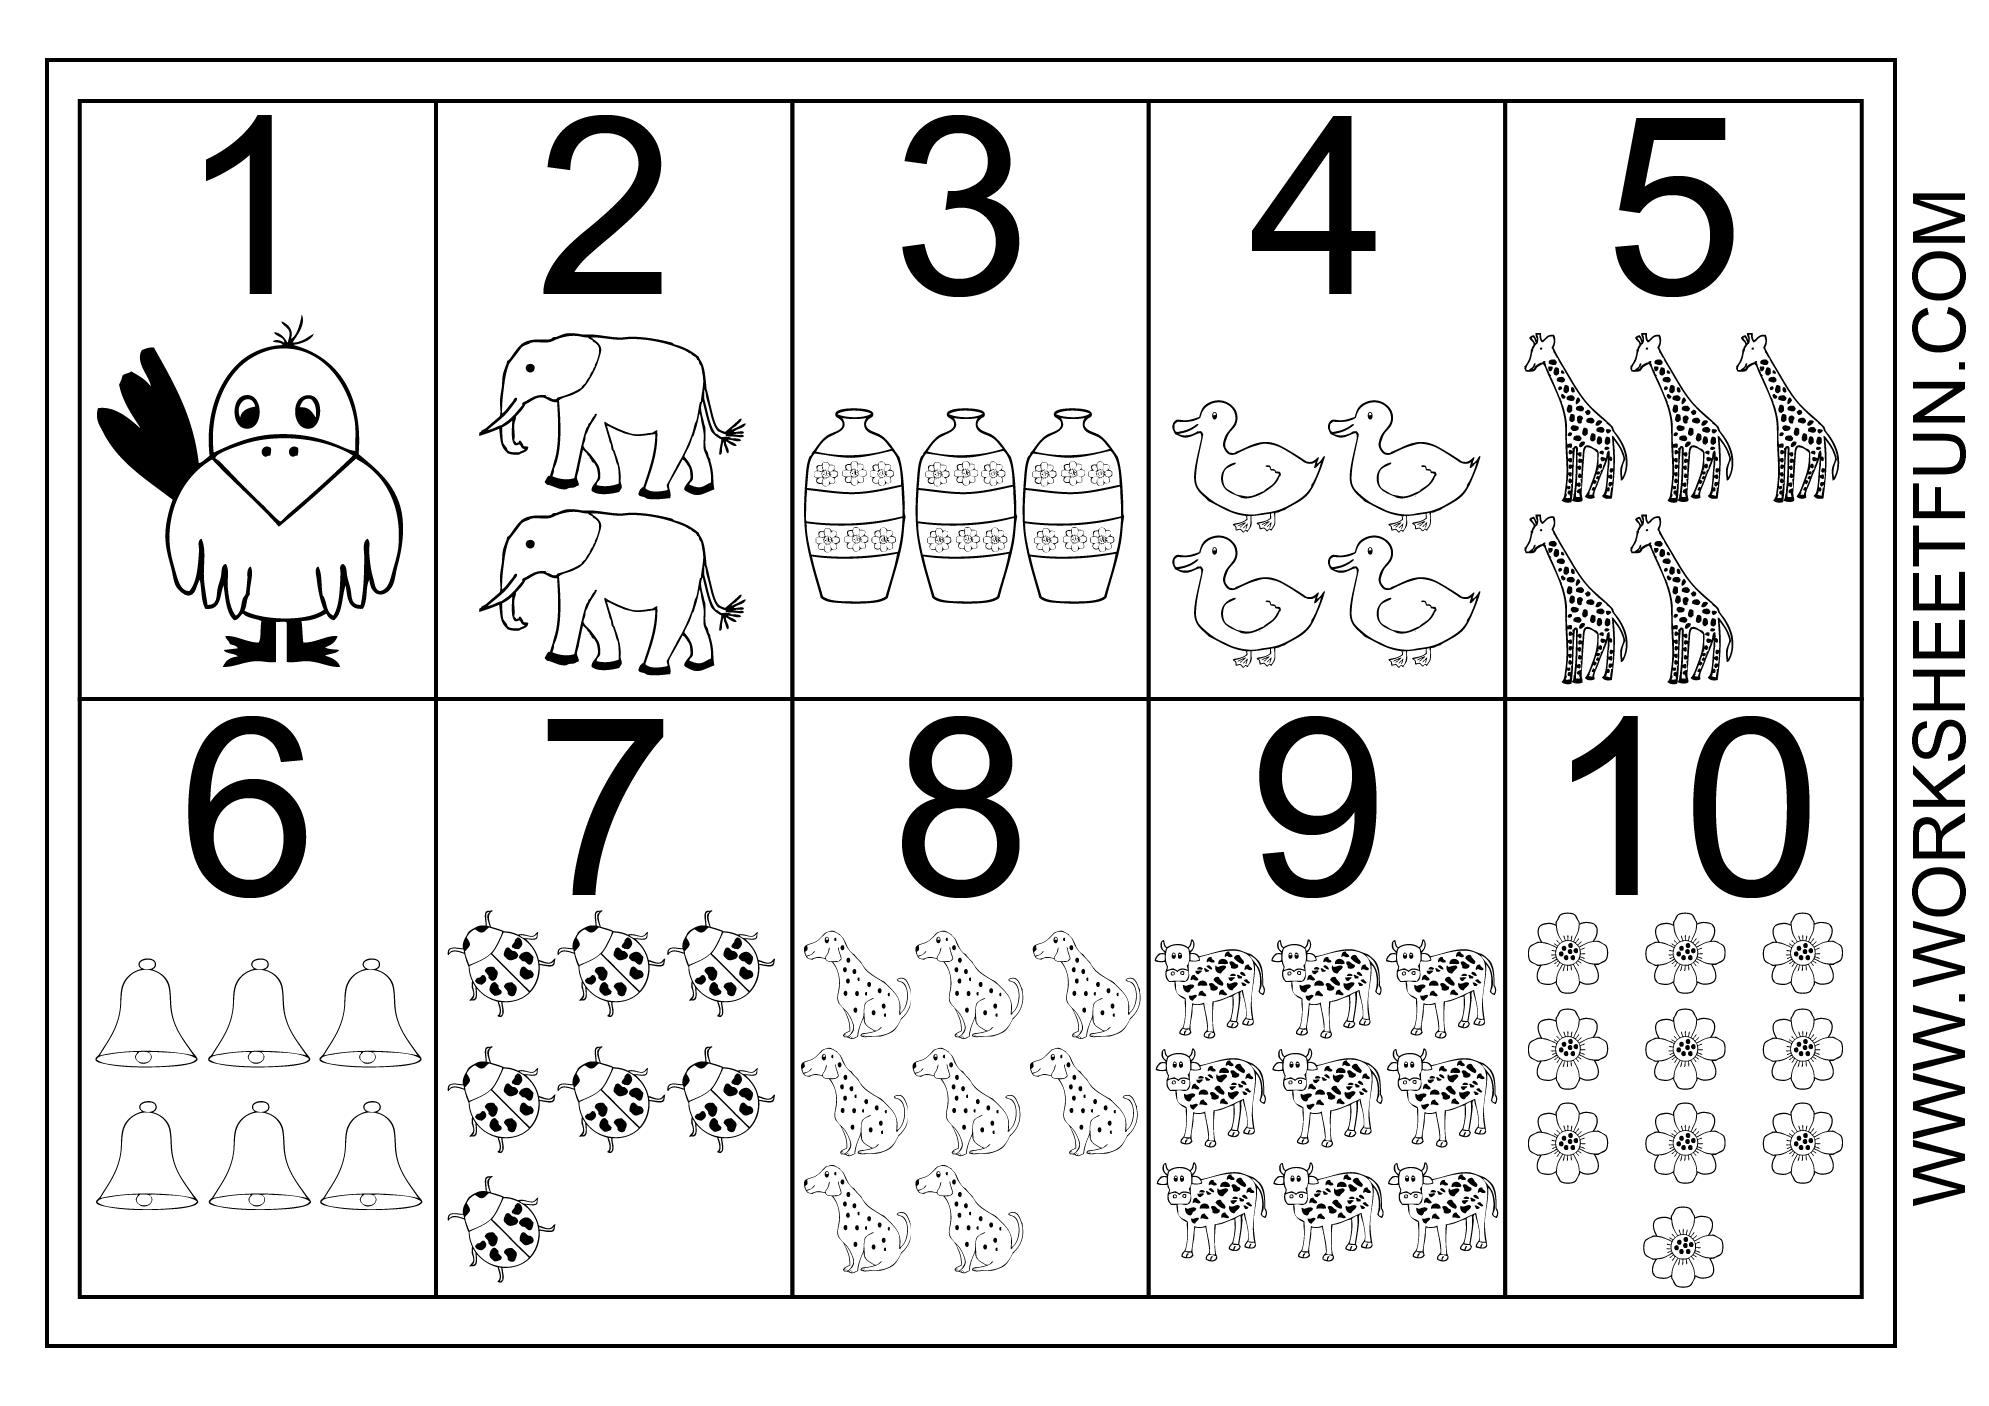 16-best-images-of-numbers-1-50-worksheets-kindergarten-number